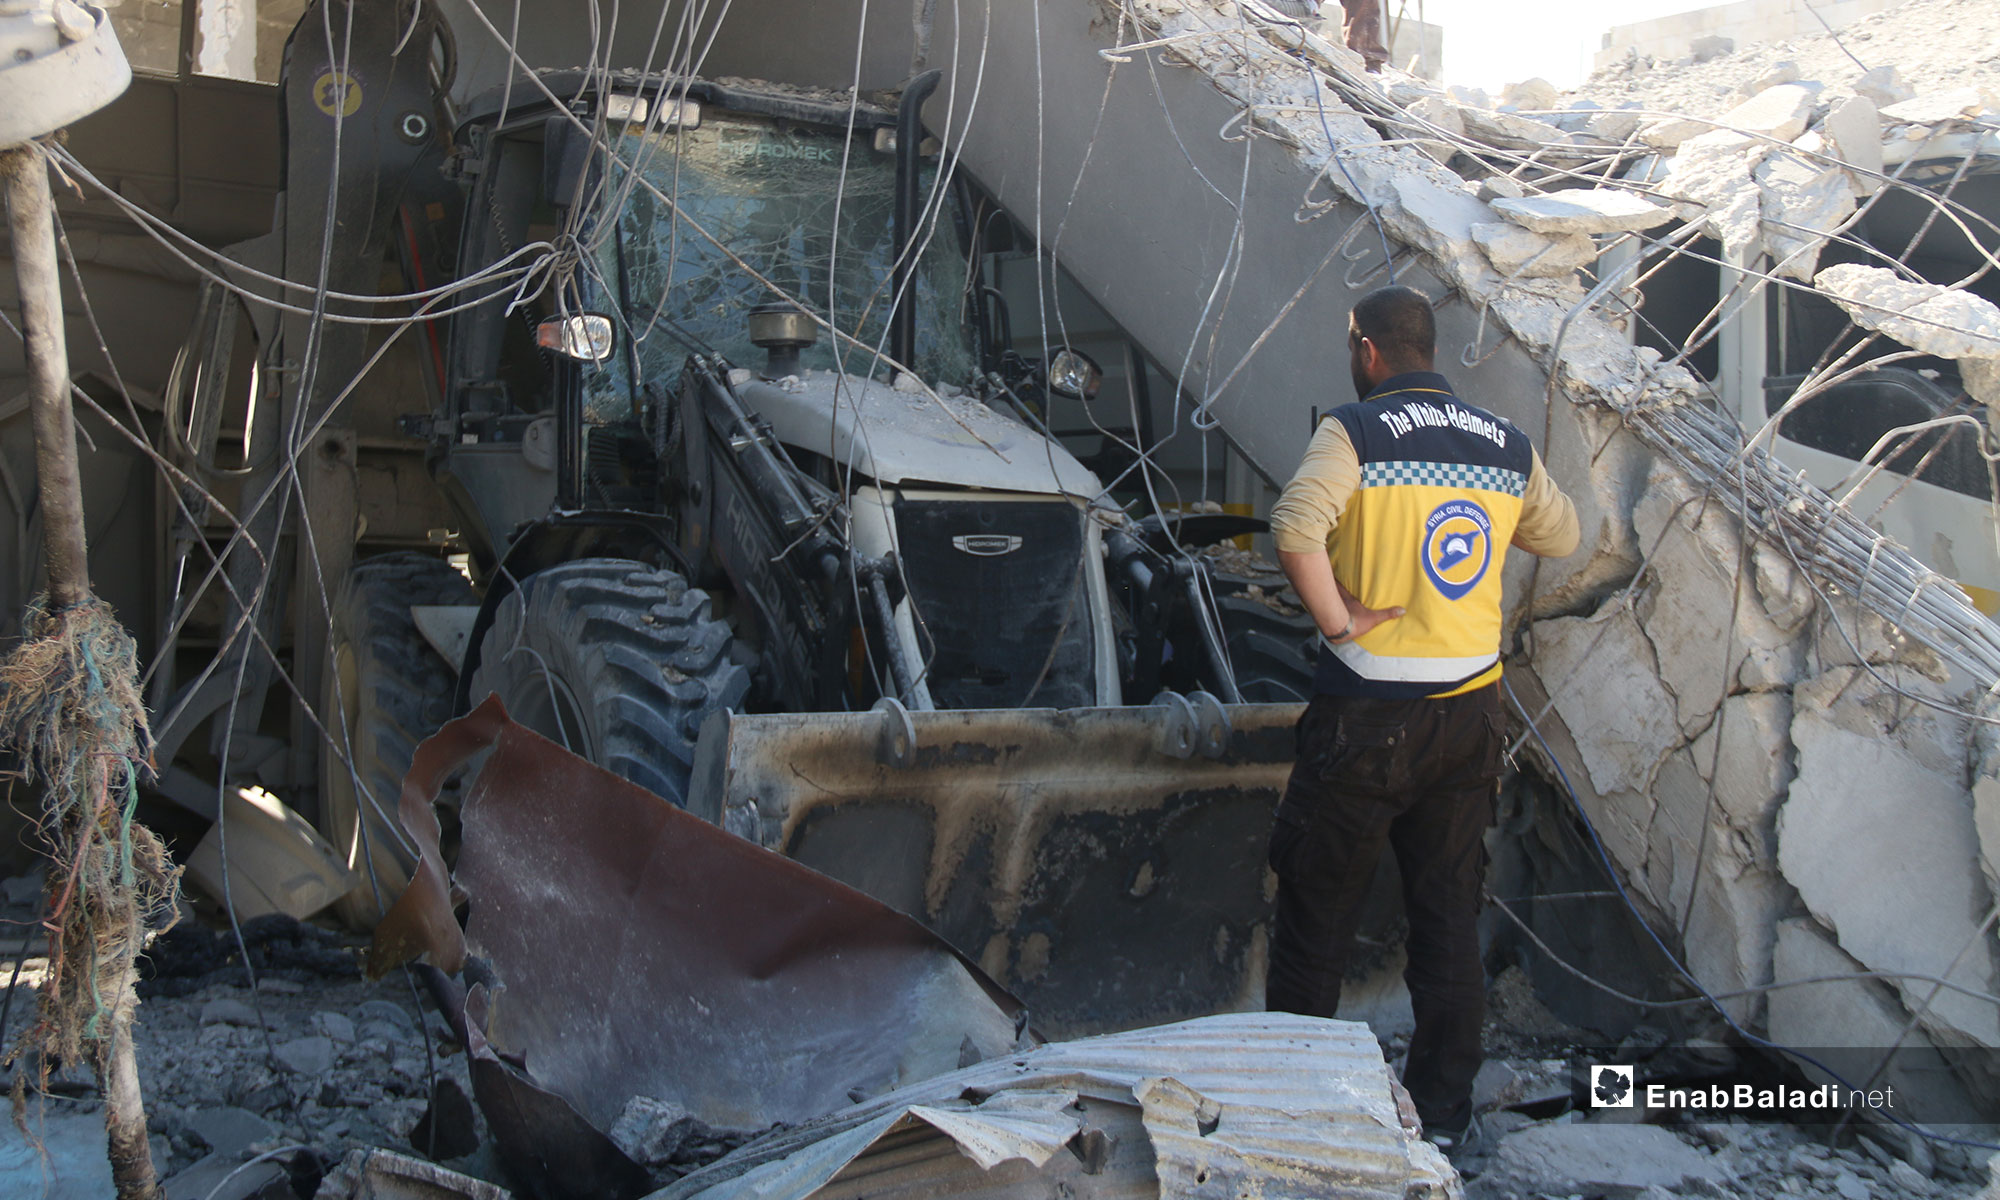 Destruction that befell the Civil Defense Center at the city of Kafr Nabl  - May 13, 2019 (Enab Baladi)